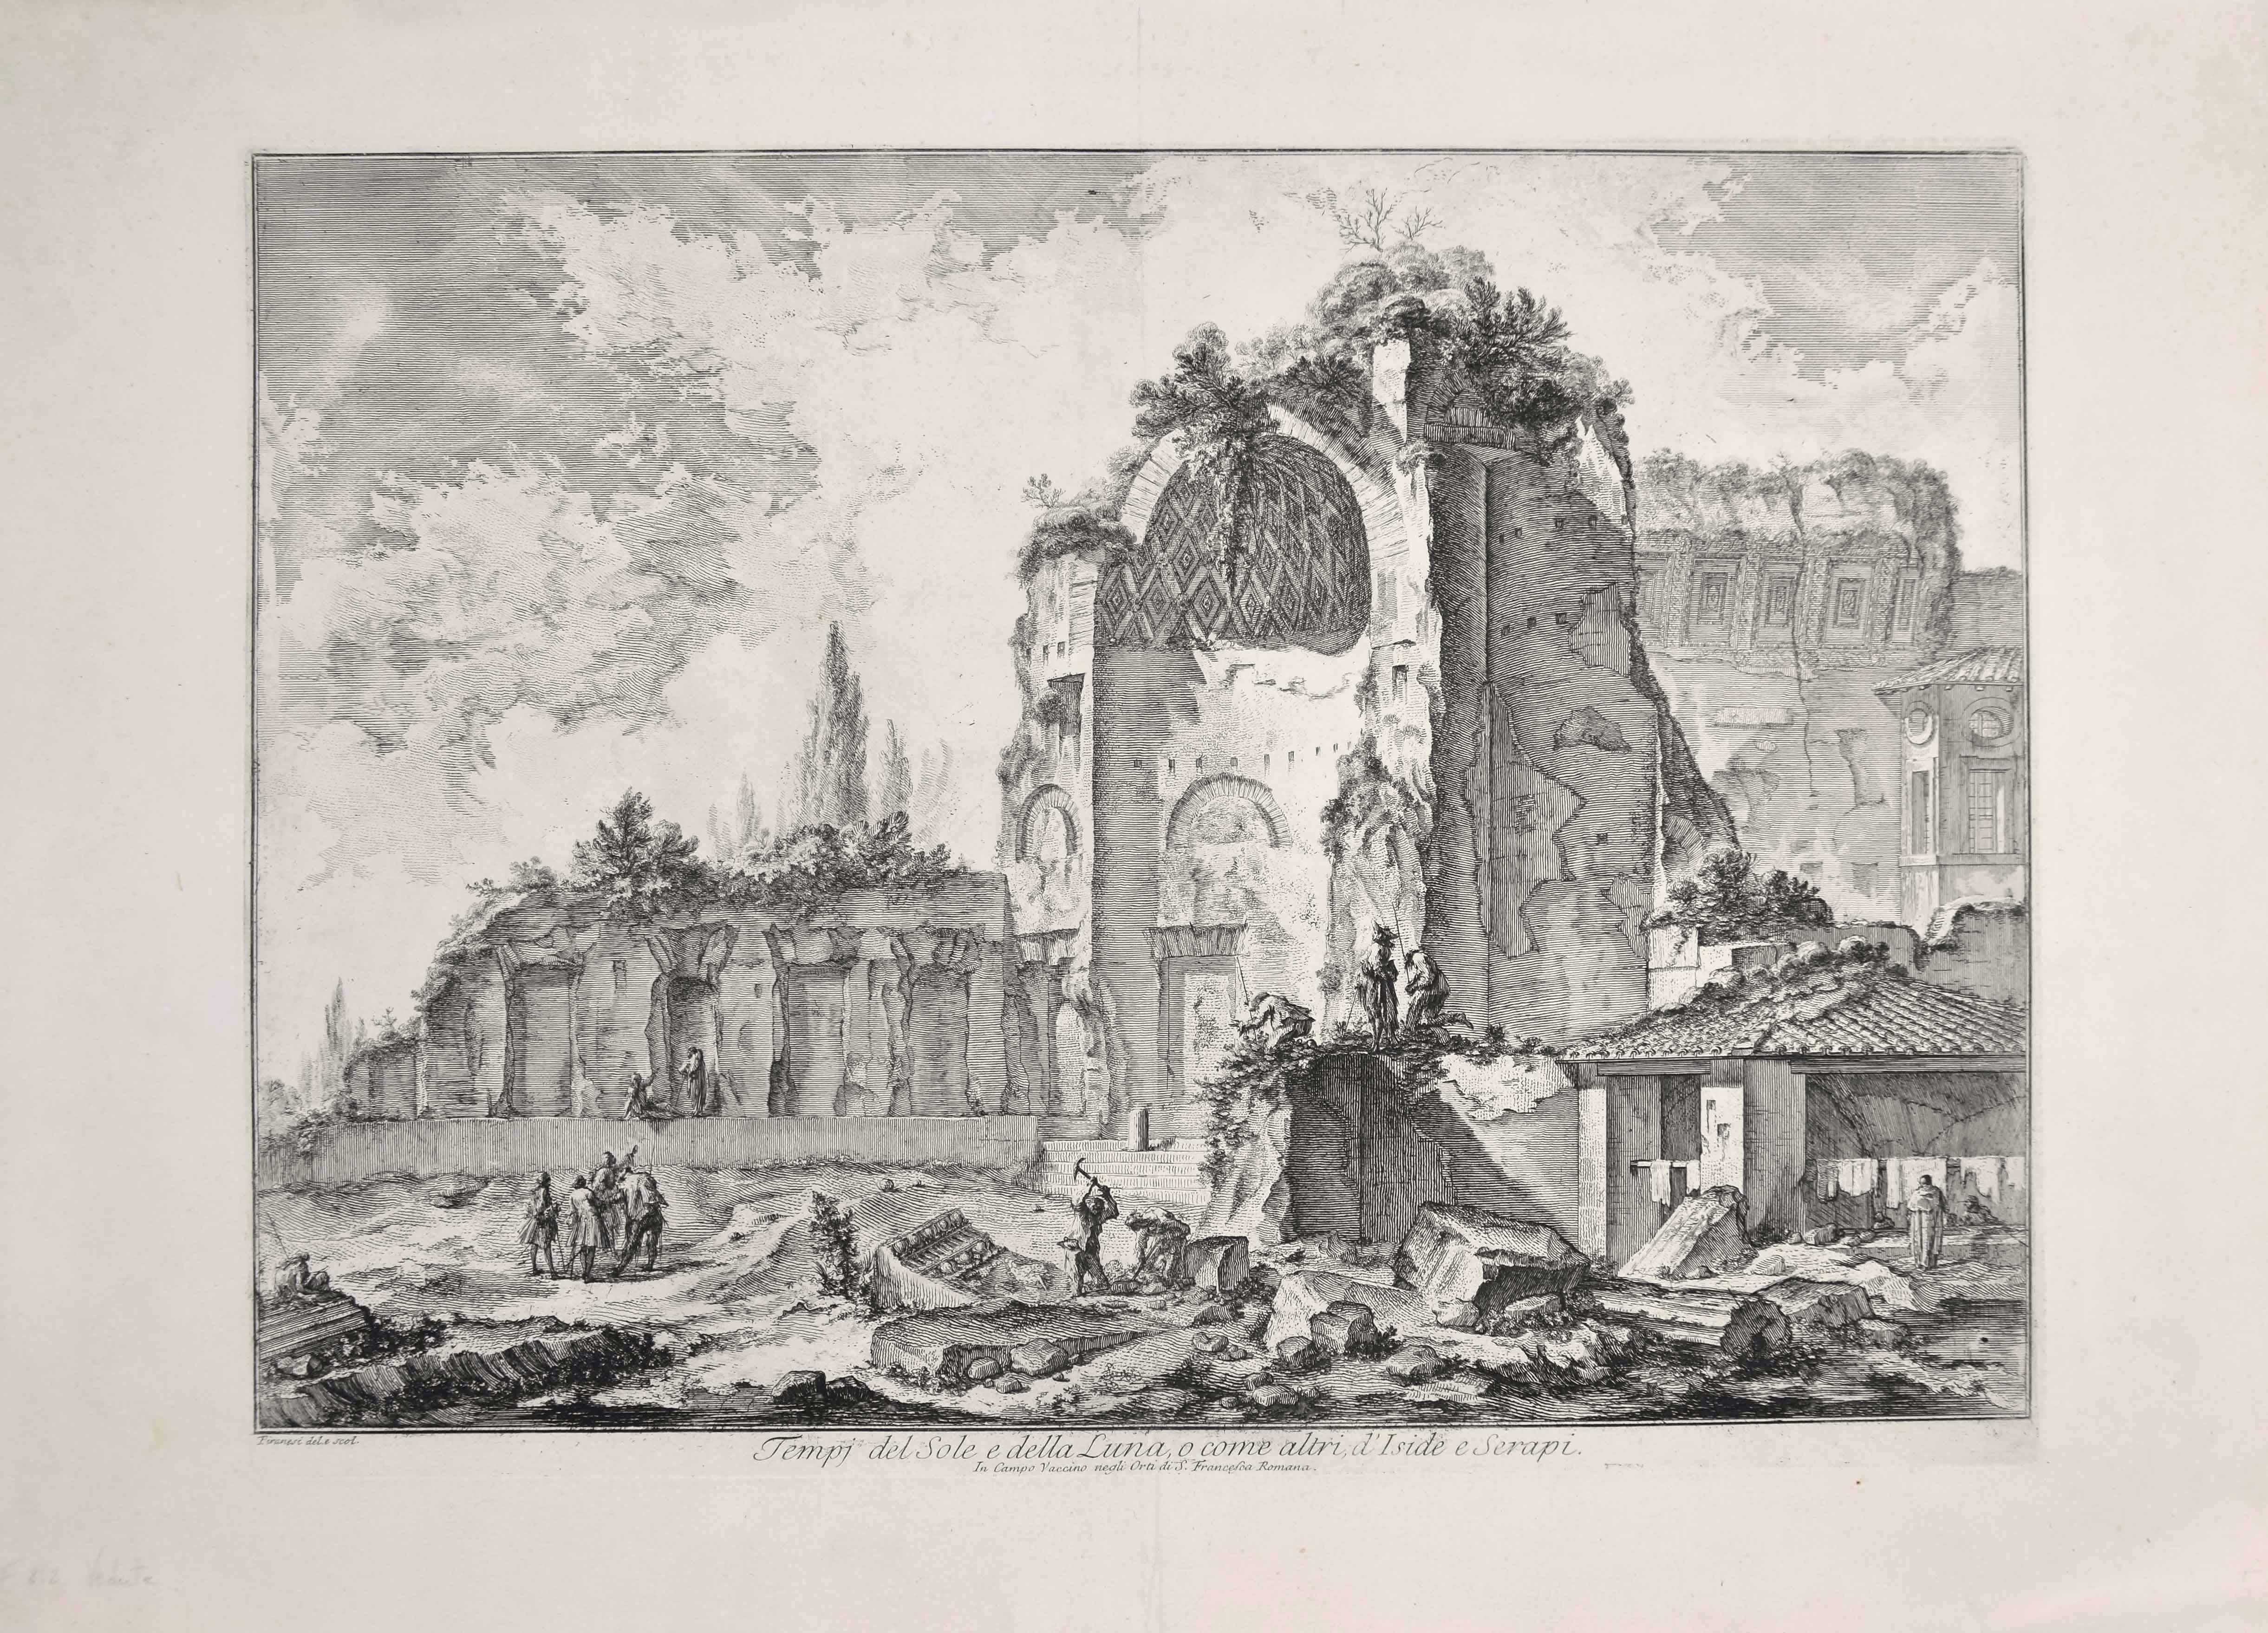 Temples of Iside and Serapi - Etching by G. B. Piranesi - 1759 - Print by Giovanni Battista Piranesi